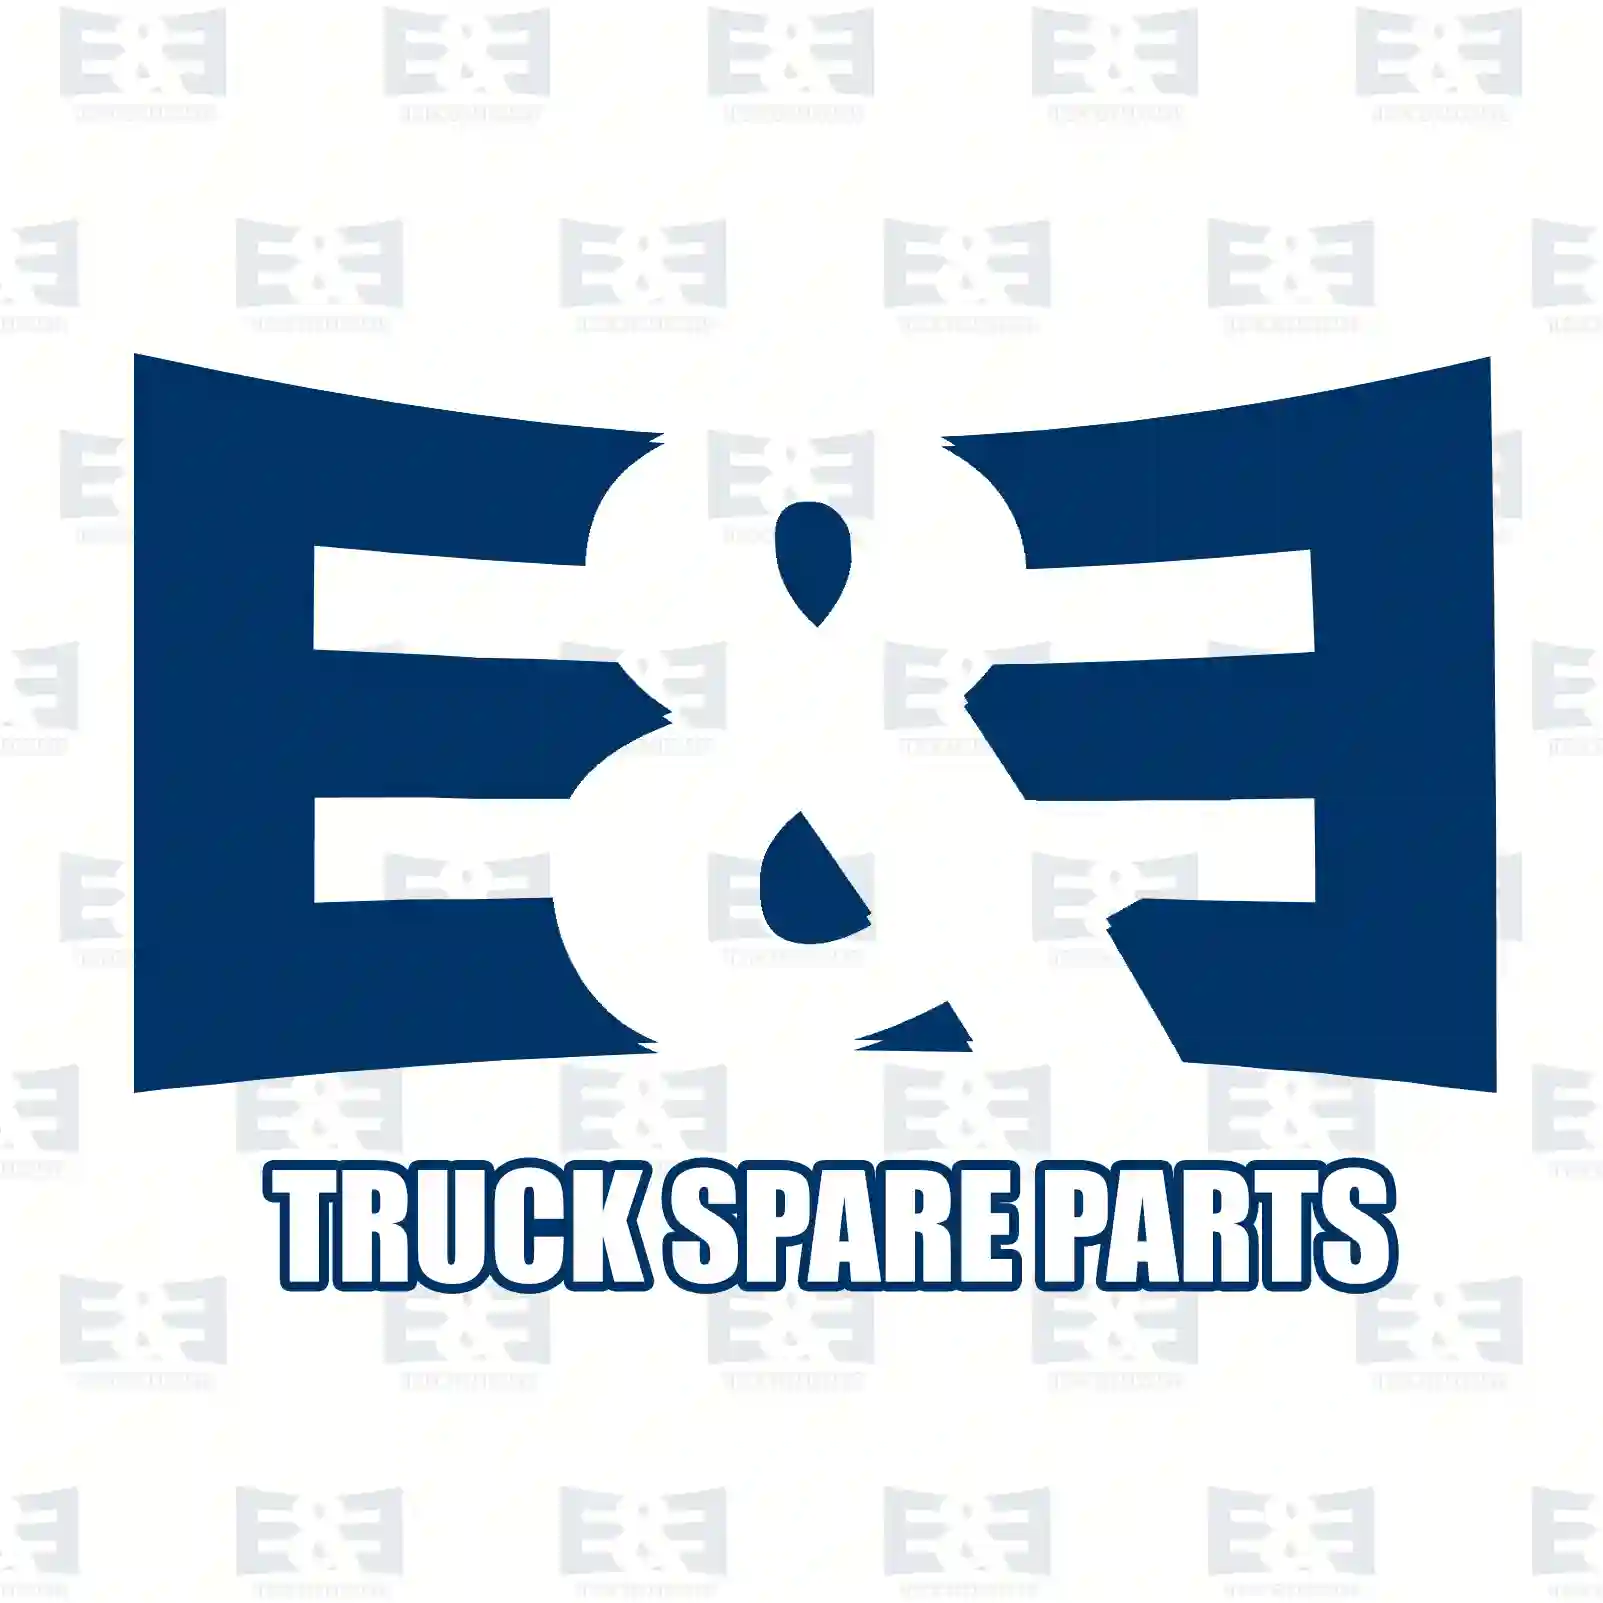 Rear Axle, Complete Axle modulator, EE No 2E2270743 ,  oem no:1506654, 2349975, 349975, 3499750, 505816896, 5816896, 58168960, 10167581, N2509990144, AIF1166, 5021170240, 1738466, 1788953, 1802089, 579275 E&E Truck Spare Parts | Truck Spare Parts, Auotomotive Spare Parts